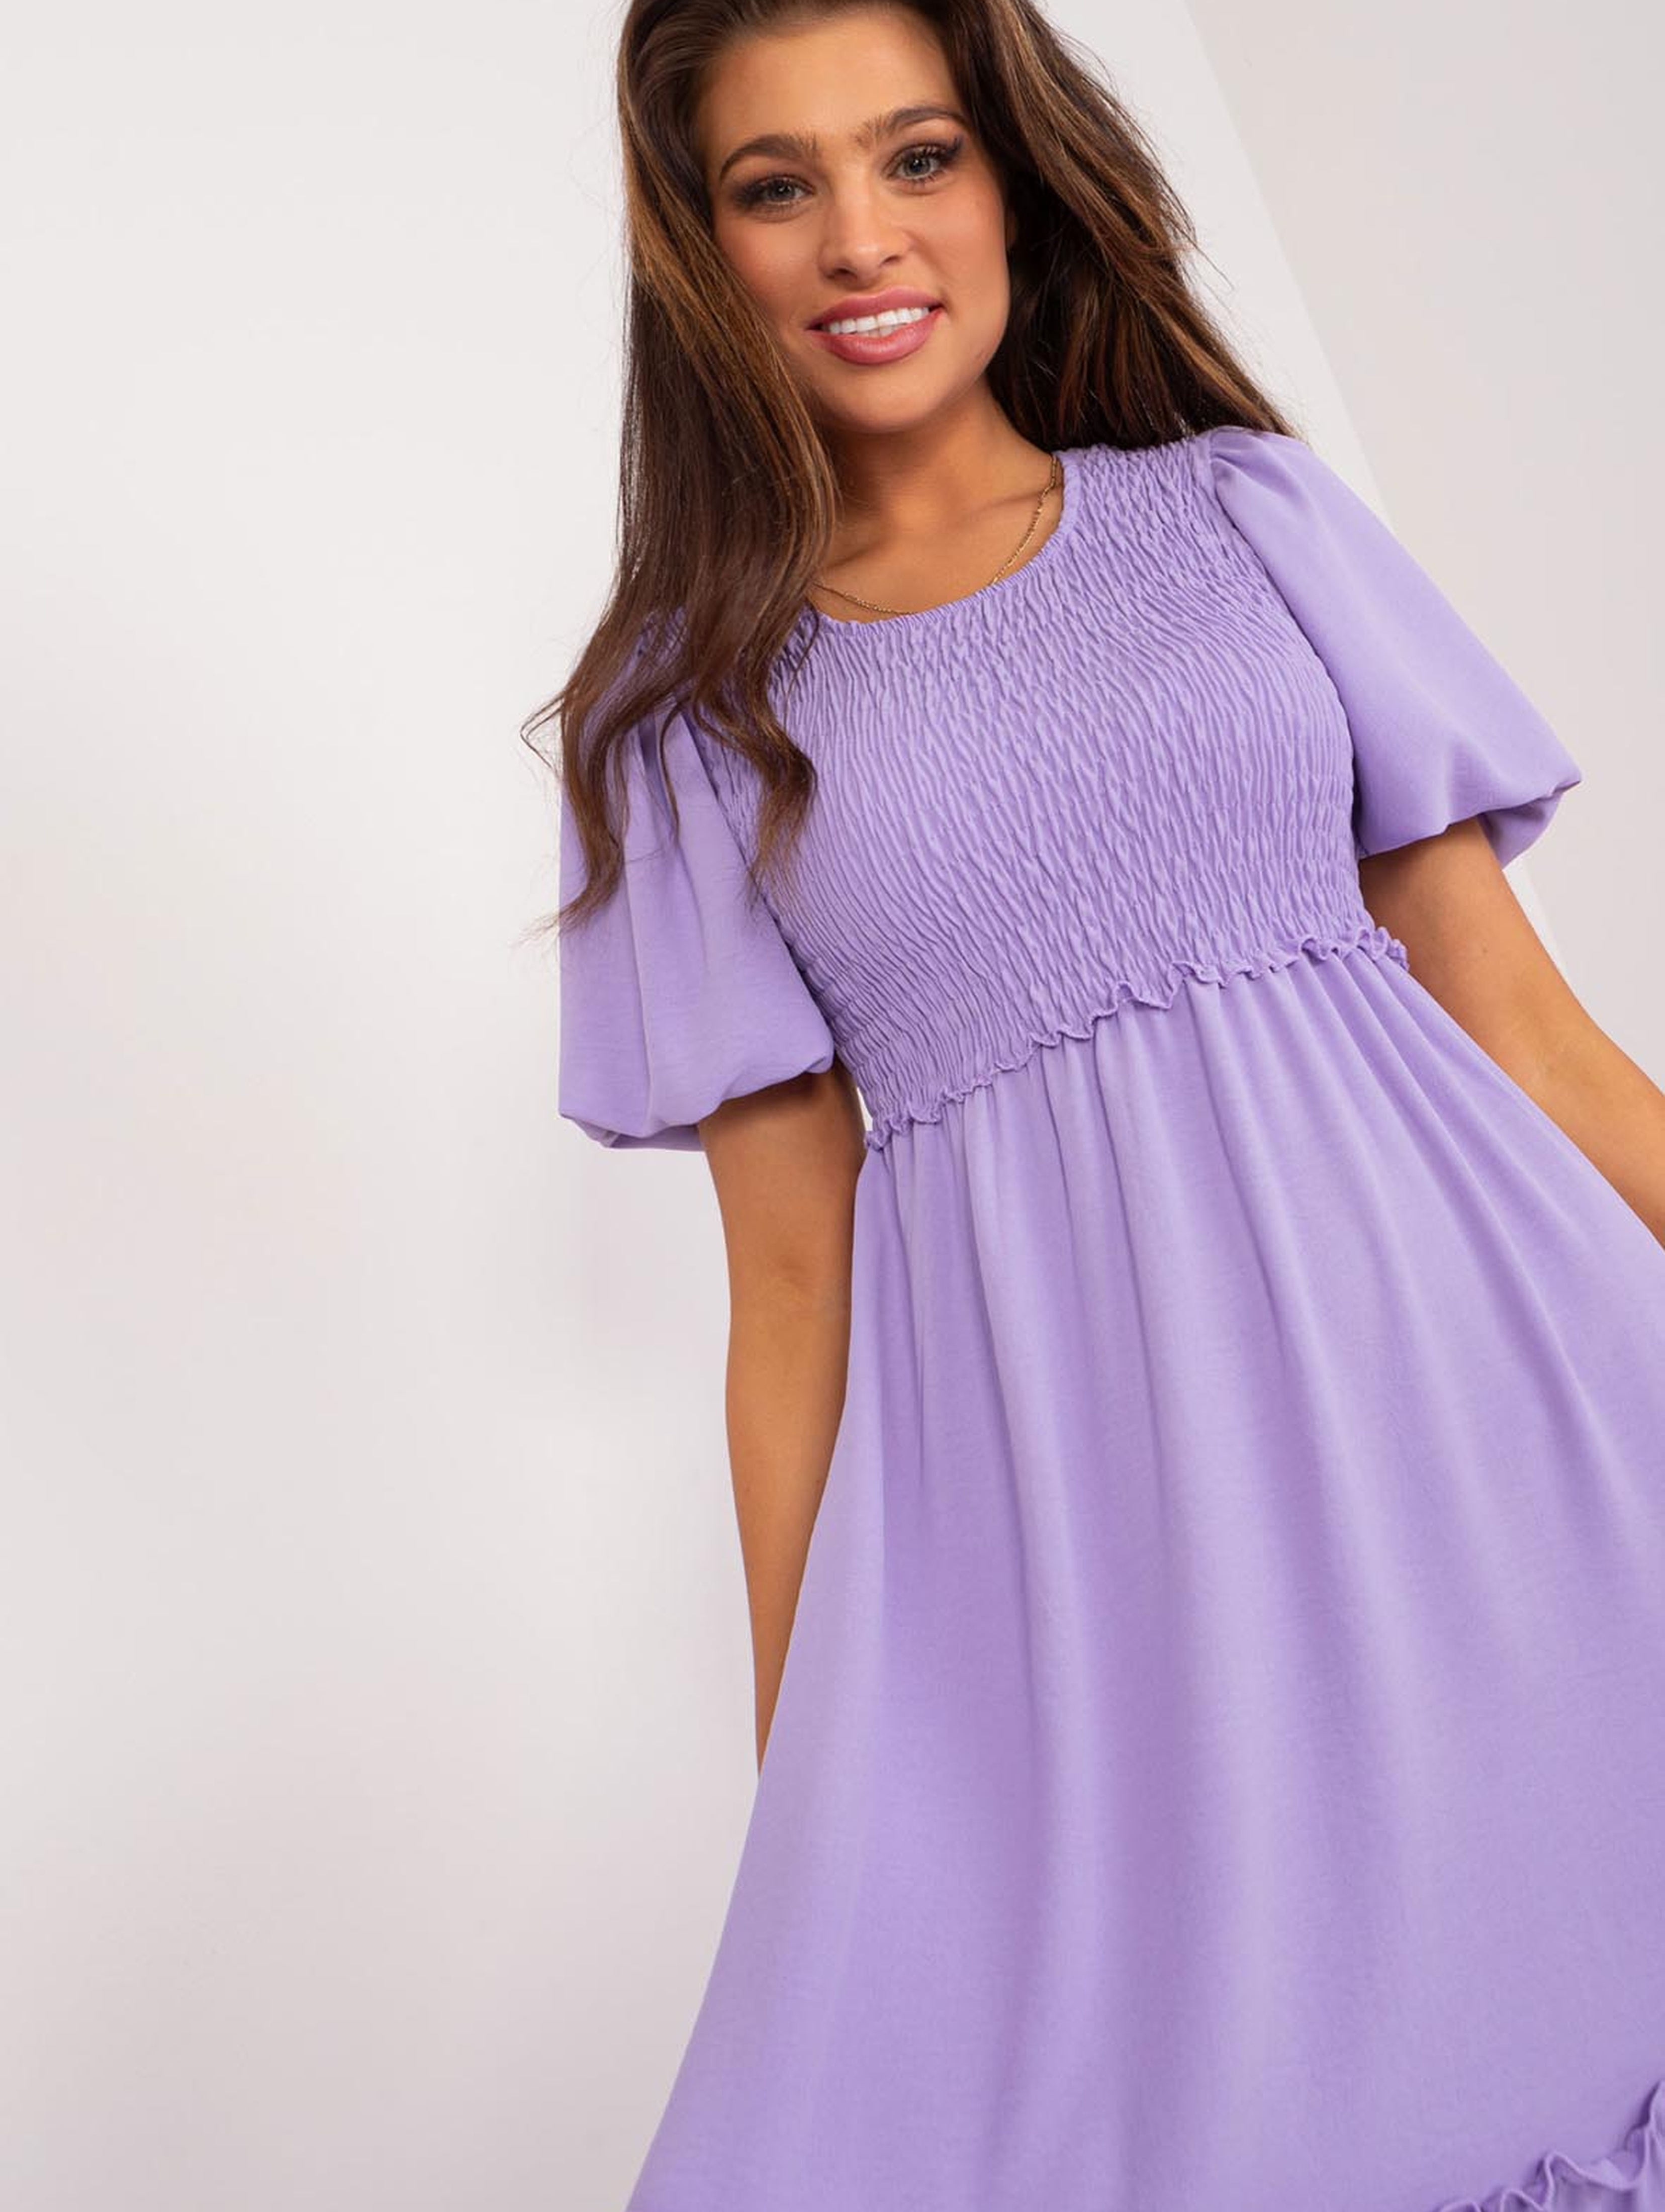 Sukienka krótka jasno fioletowa